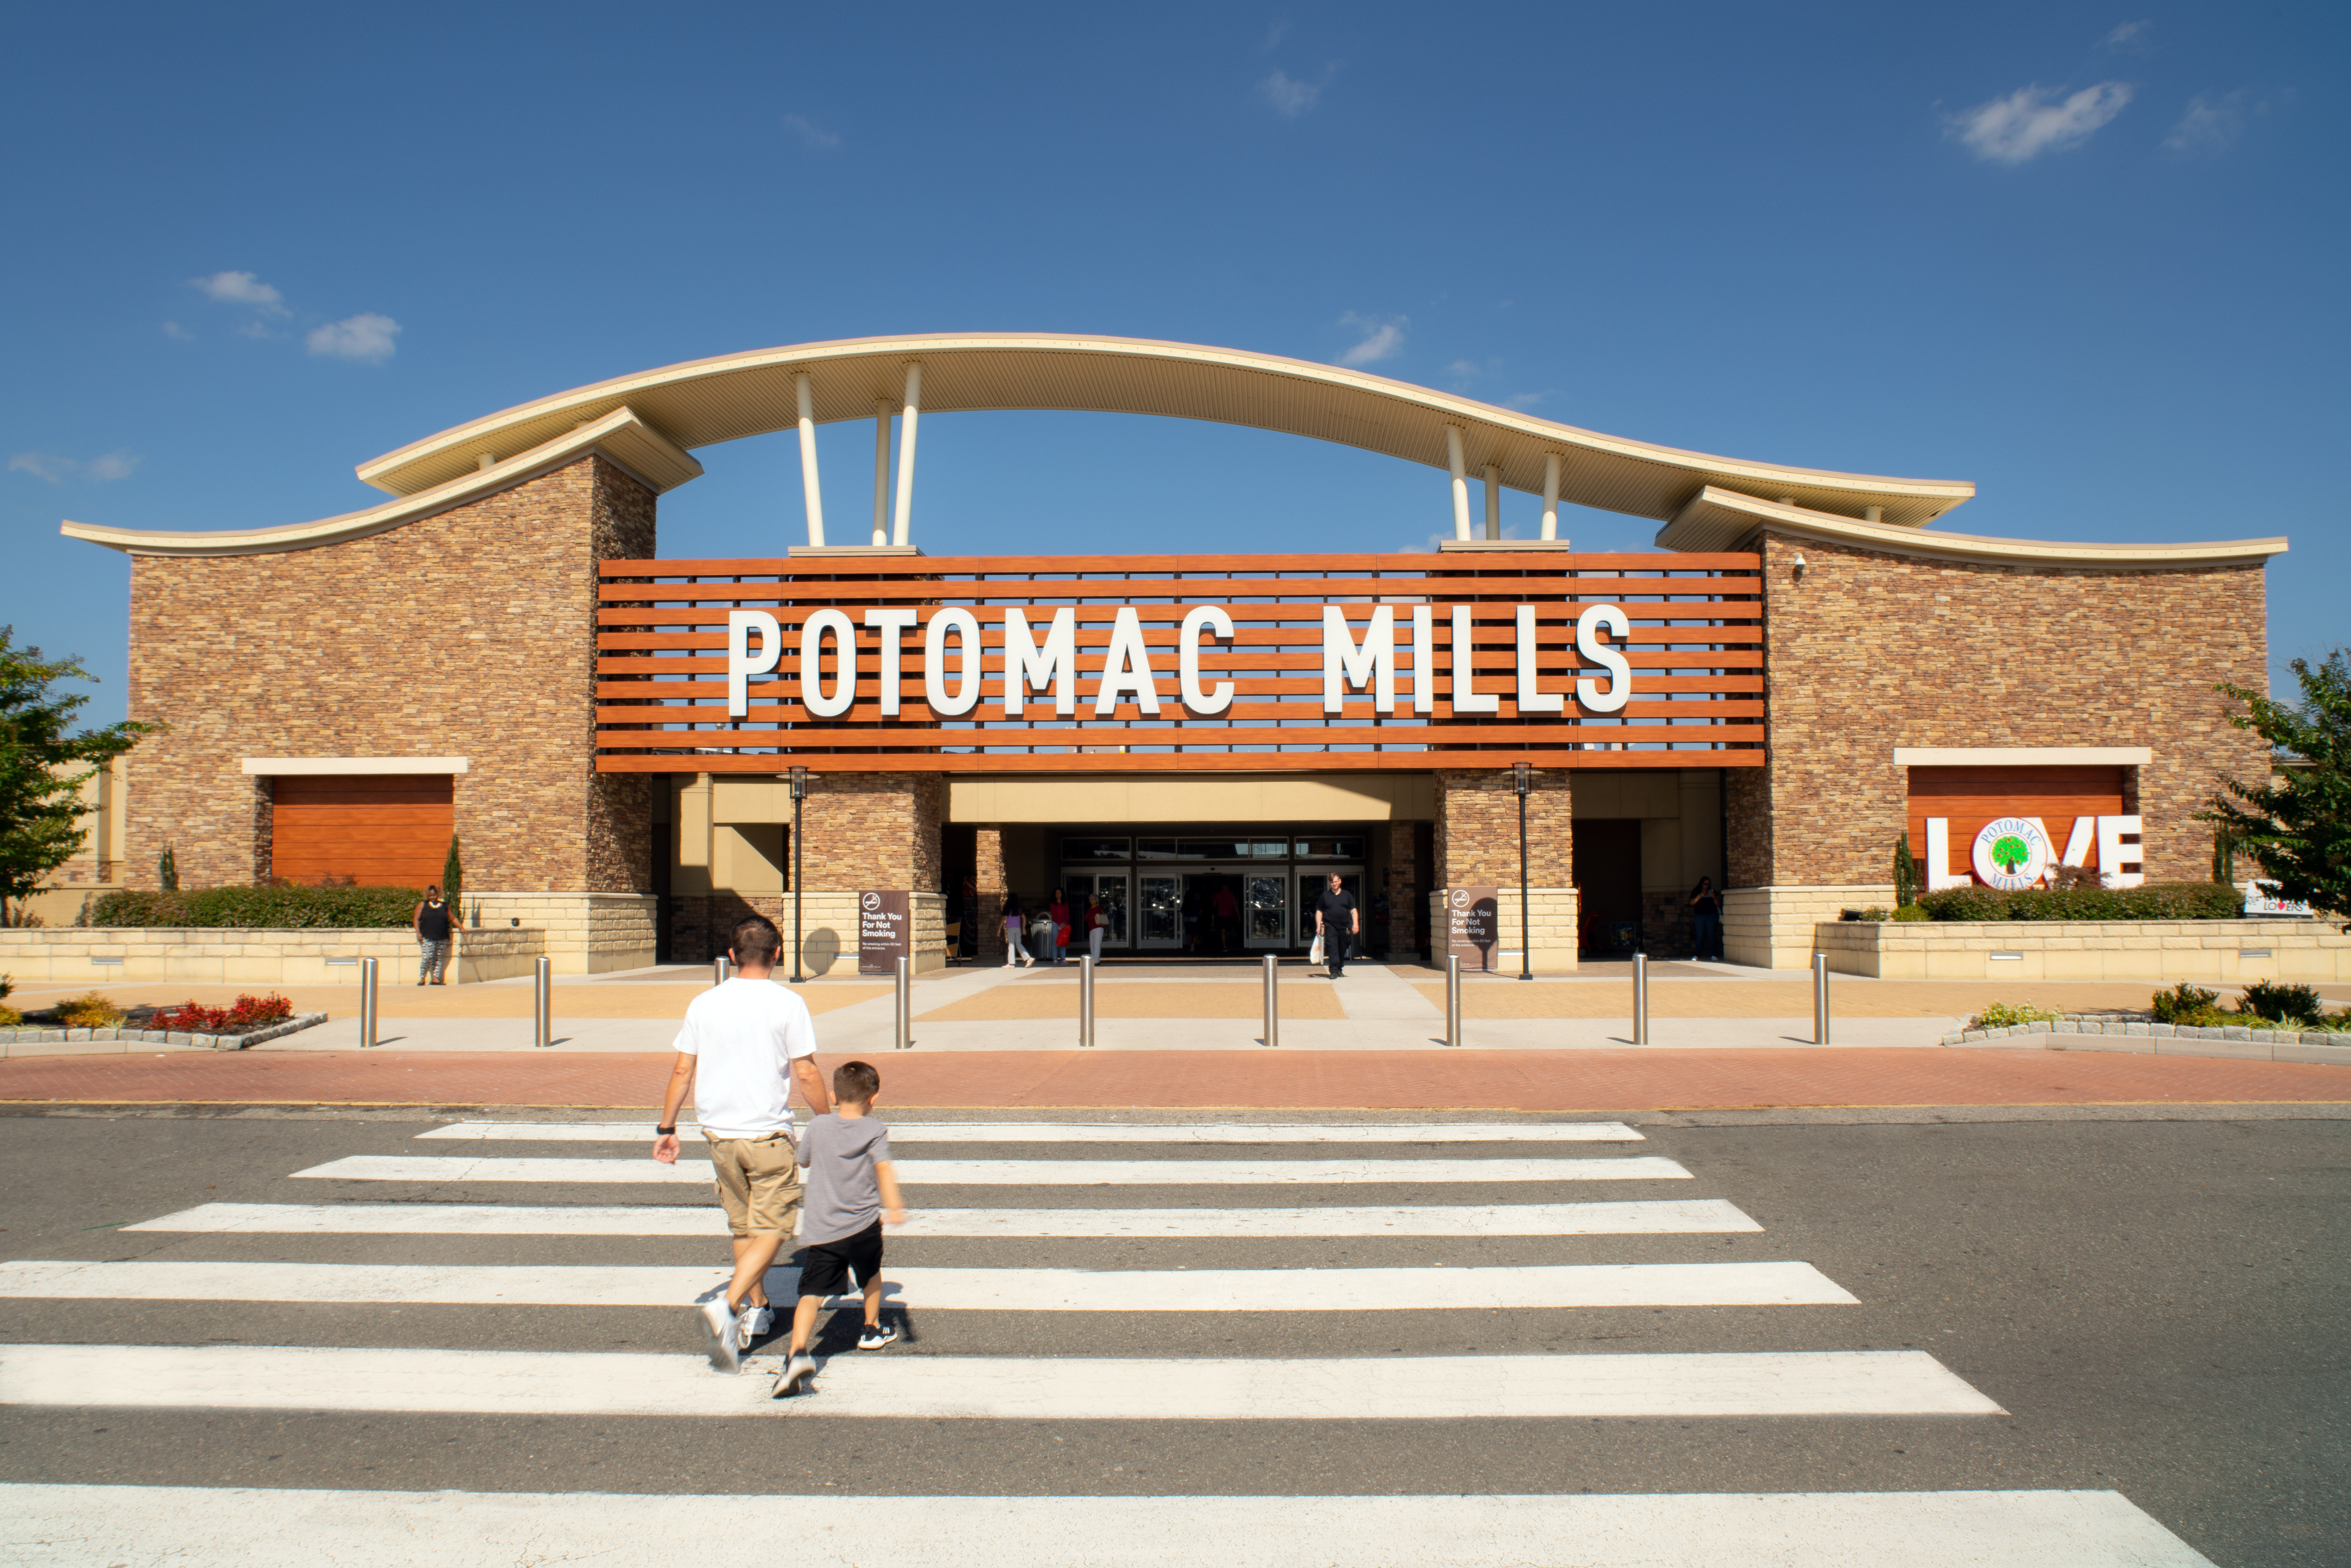 Potomac Mills - Potomac Mills added a new photo.